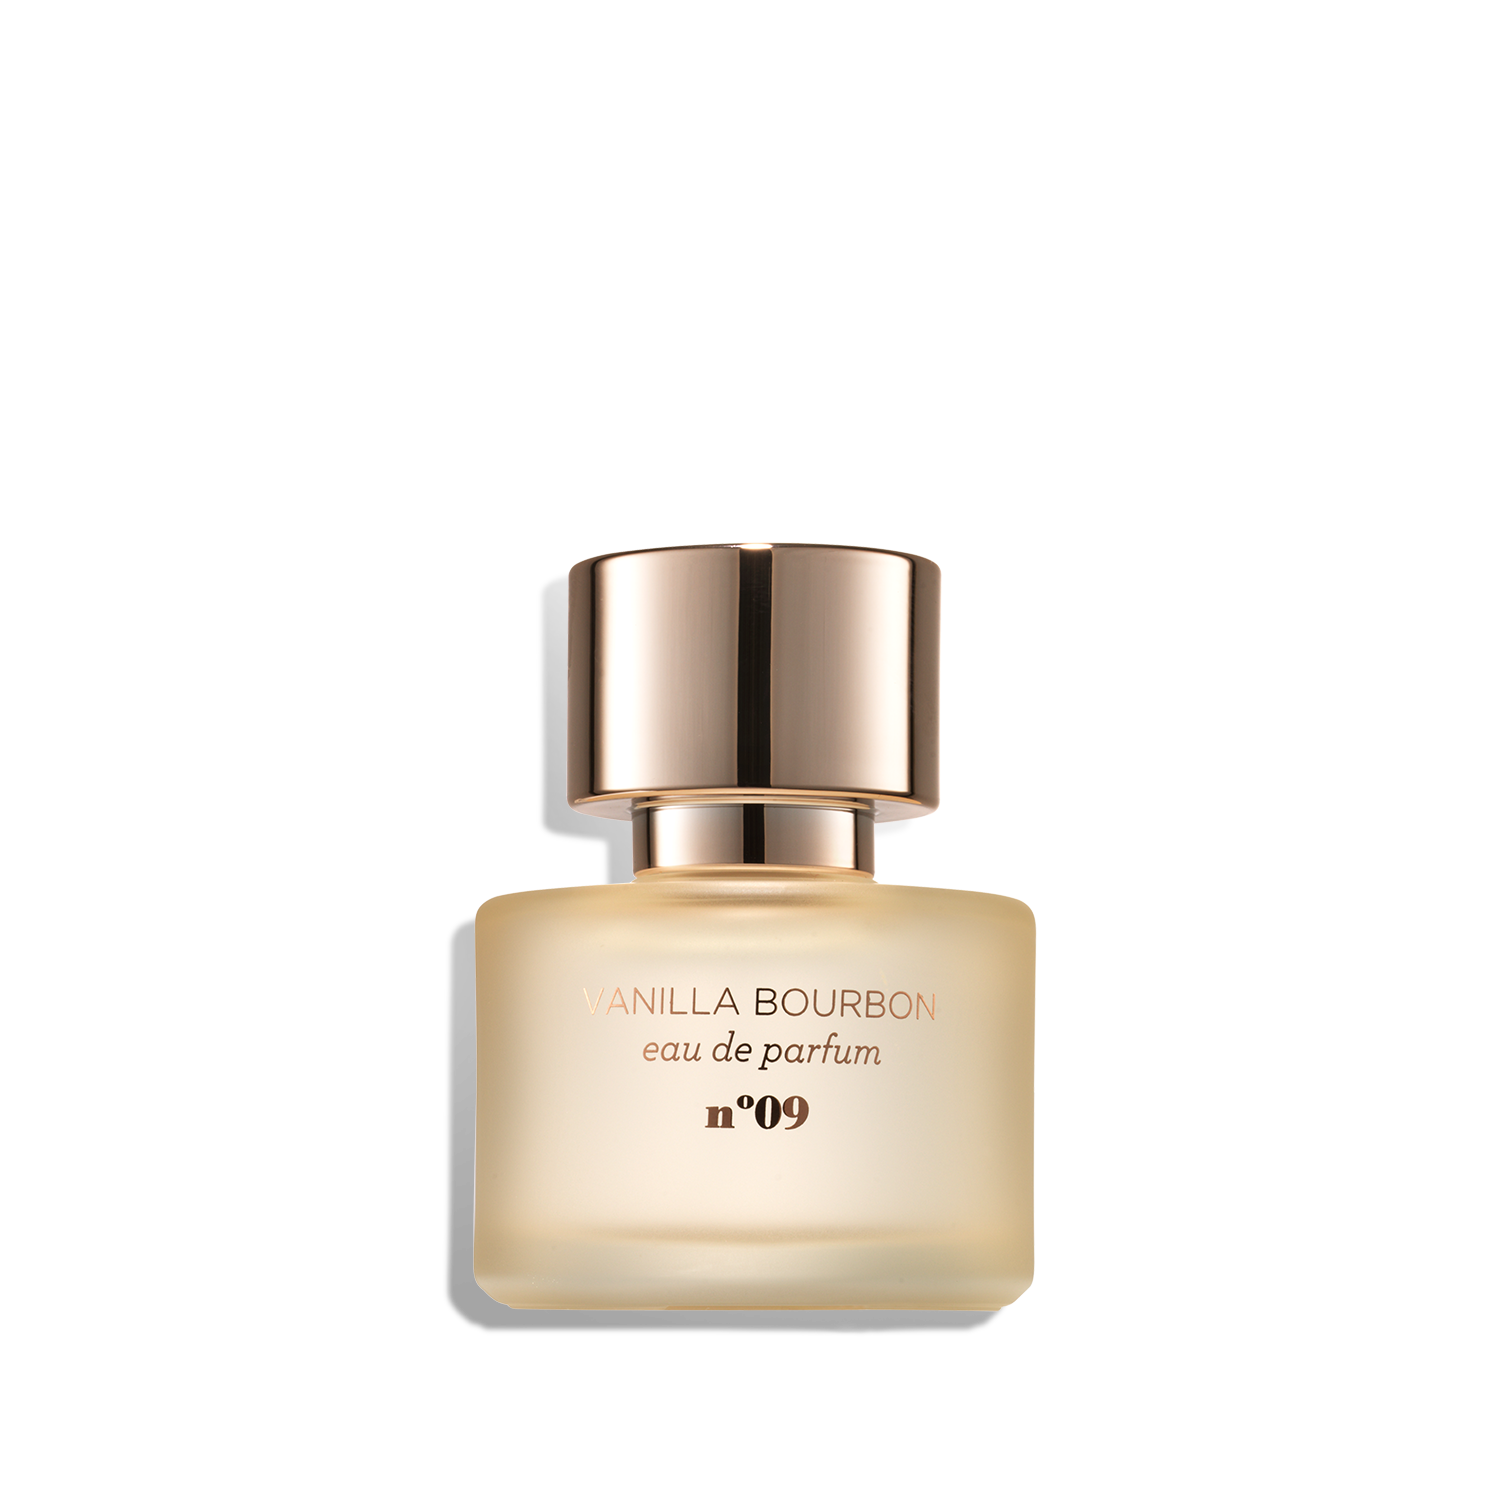 MIX:BAR Vanilla Bourbon Eau De Parfum 1.7 Fl. Oz! Blended Scent Of  Bergamot, Jasmine, Apple Blossom And Sandalwood! Inspired By The Richness  Of Pure